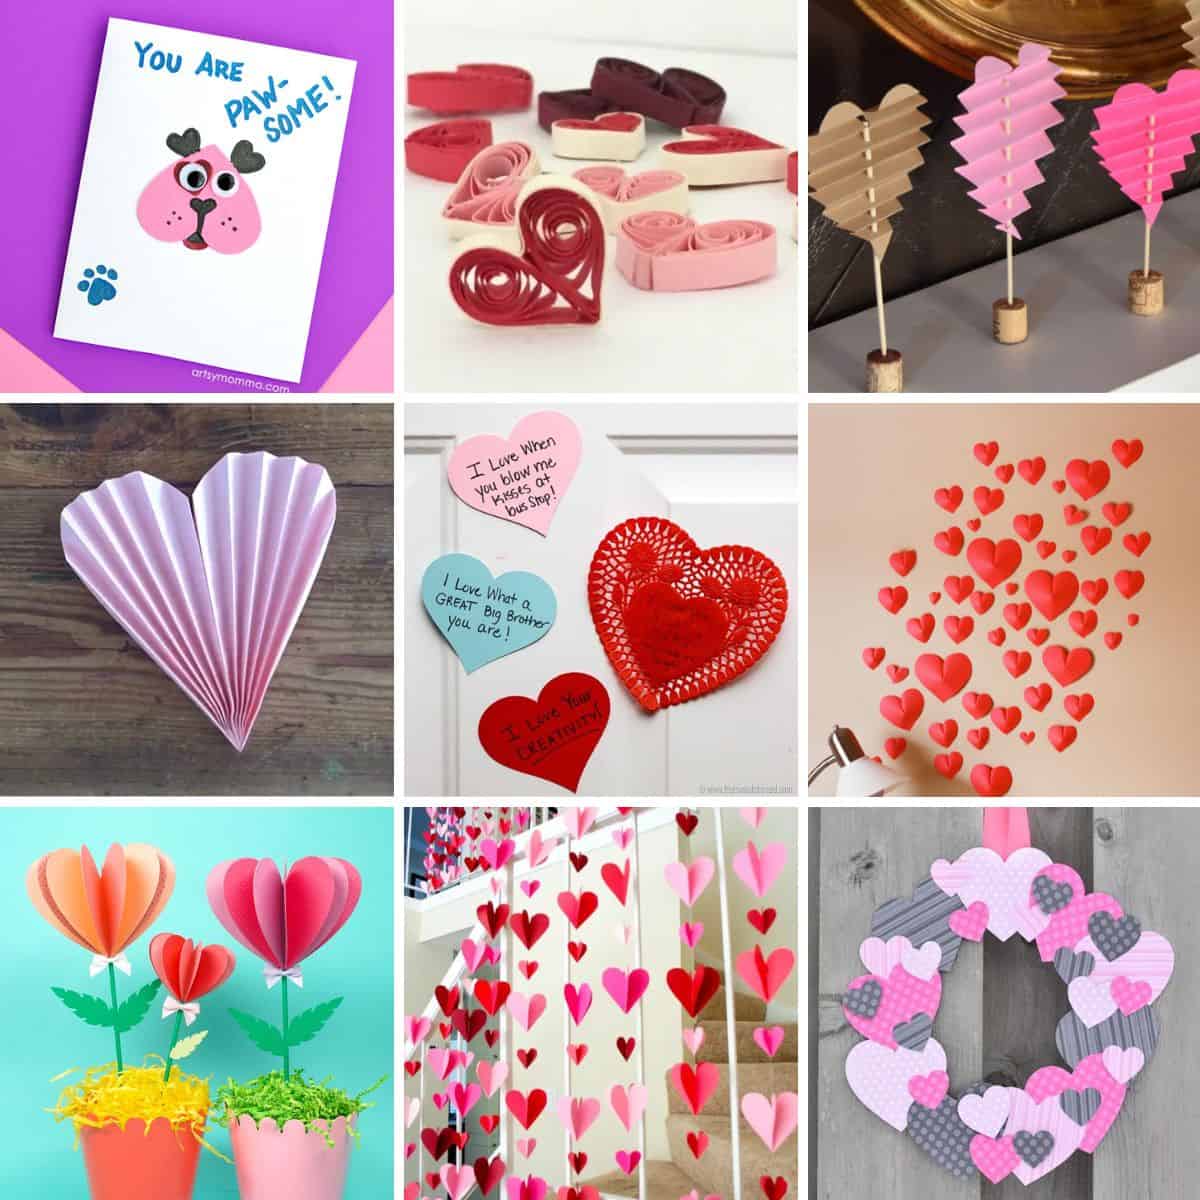 29 Simple Valentine's Paper Heart Crafts - The Crafty Blog Stalker